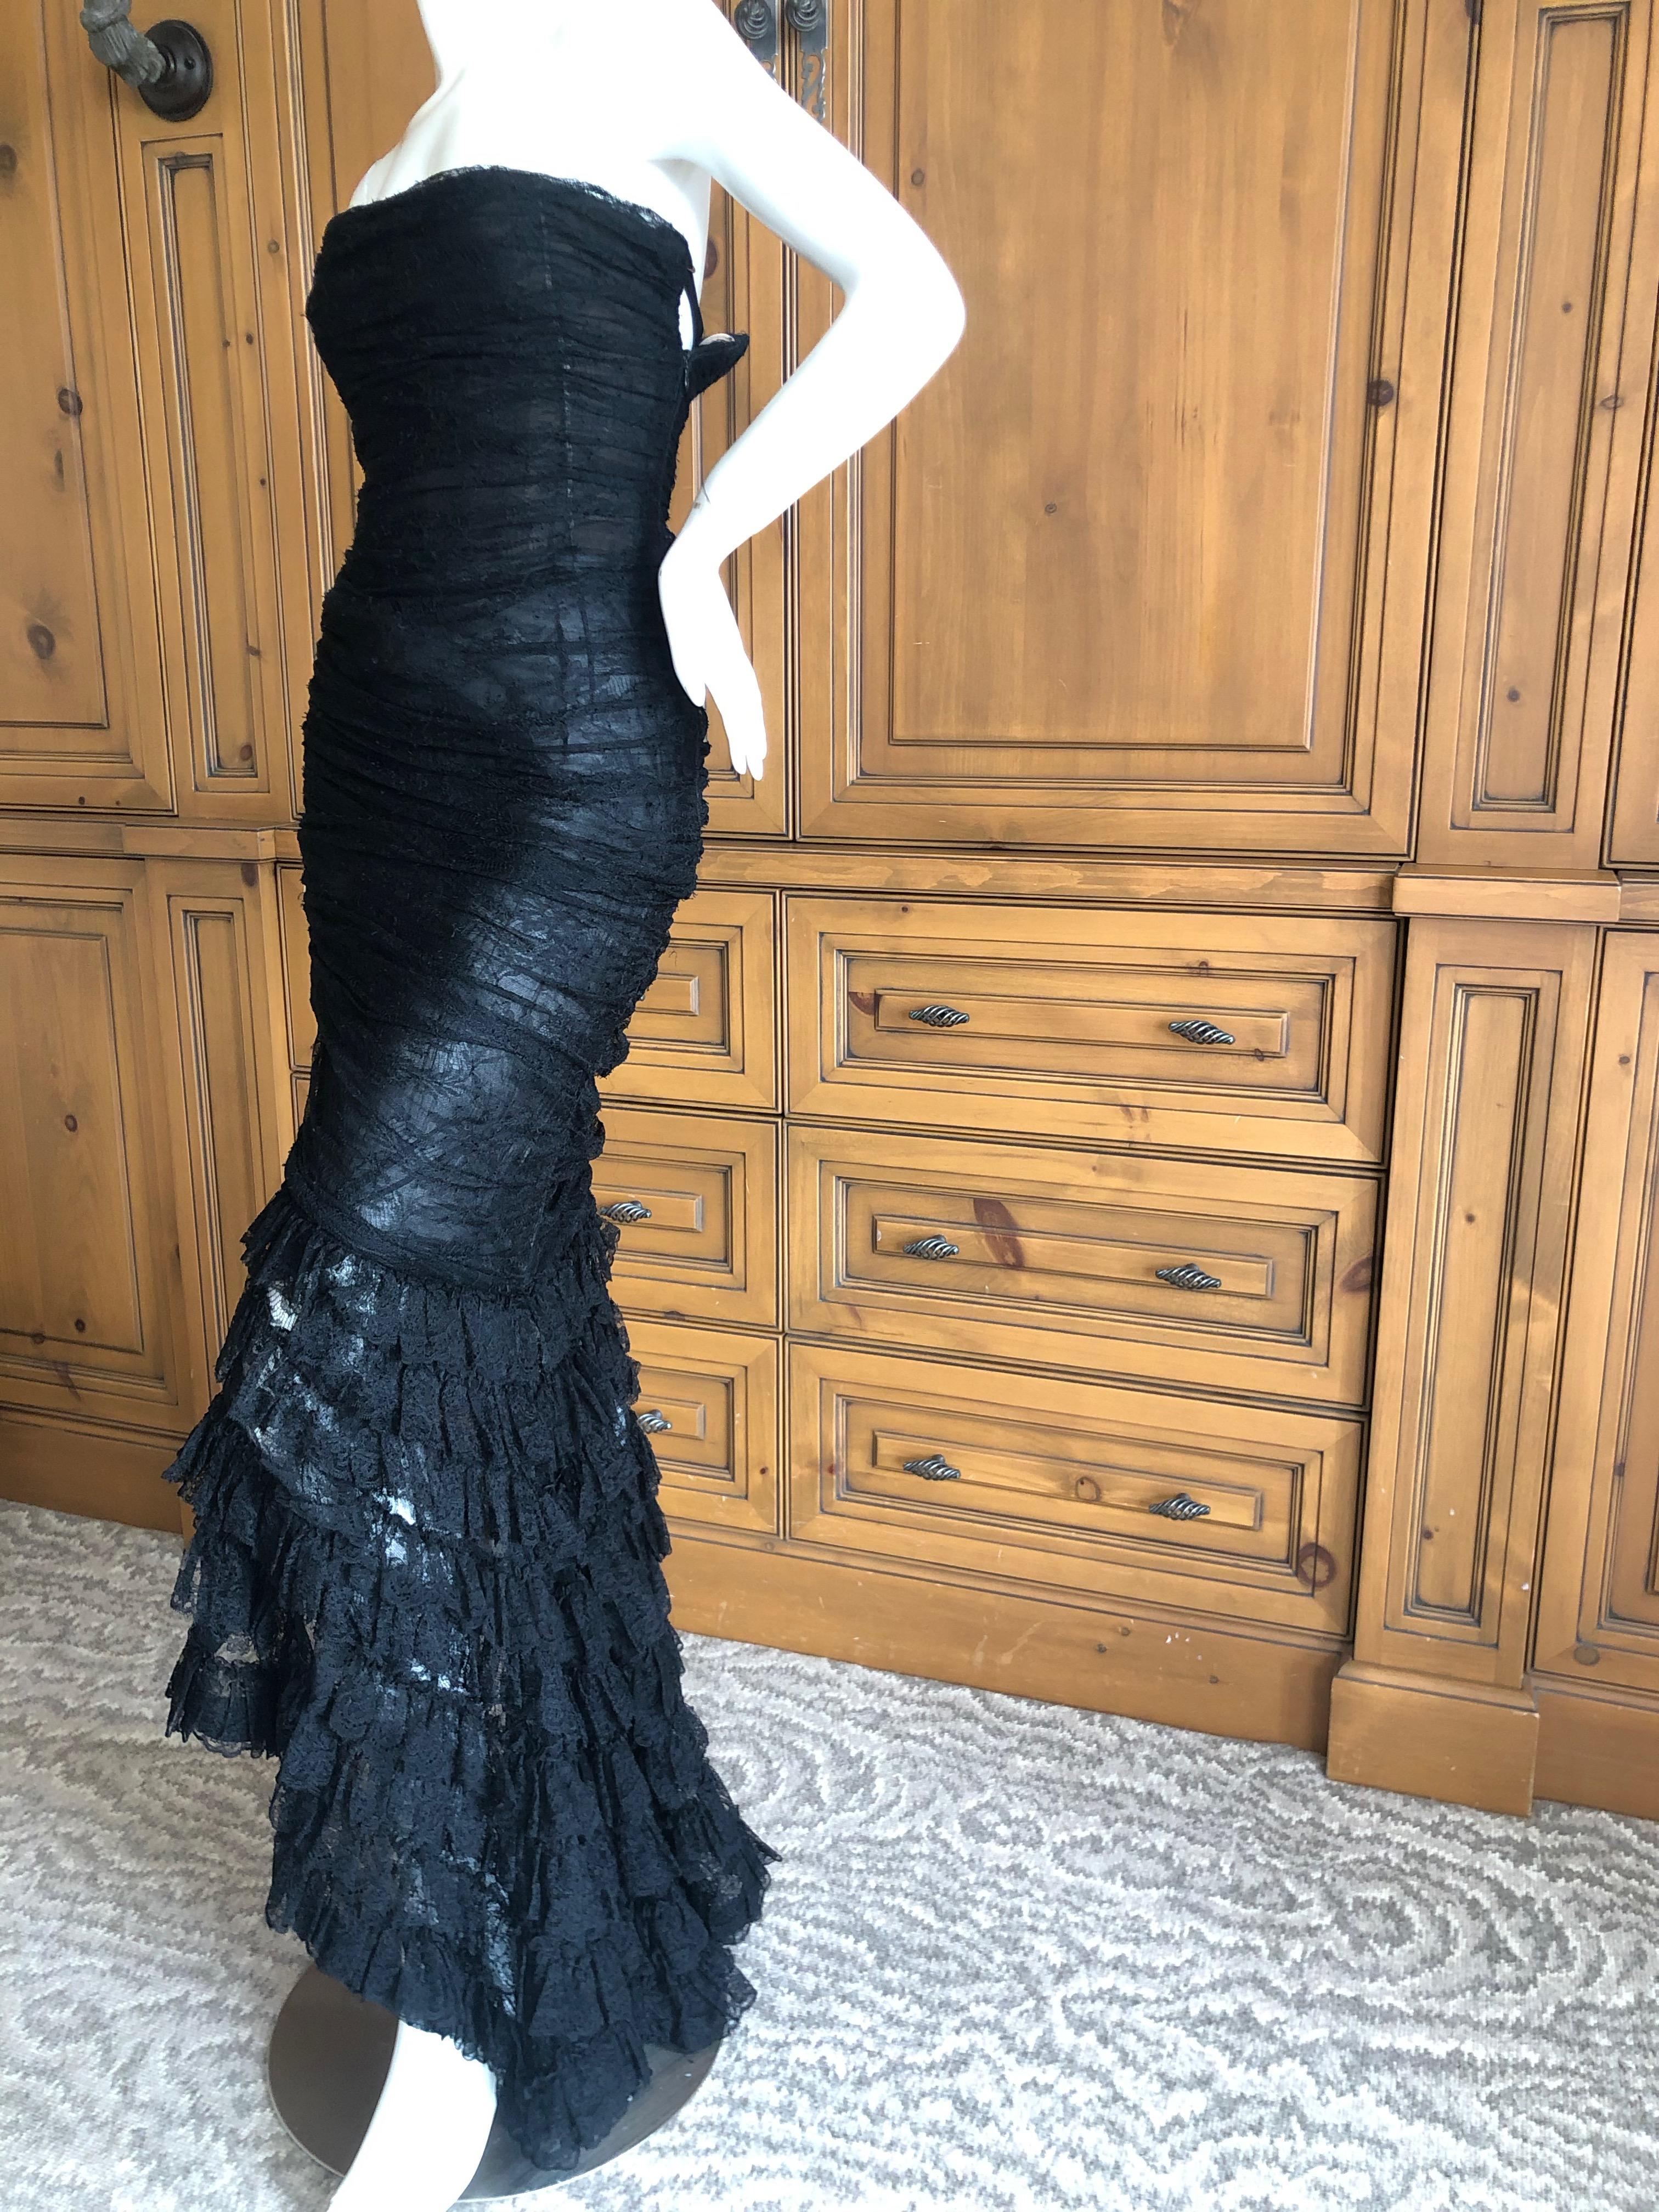  Oscar de la Renta Vintage 1980's Black Lace Evening Dress with Flamenco Ruffles In Good Condition For Sale In Cloverdale, CA